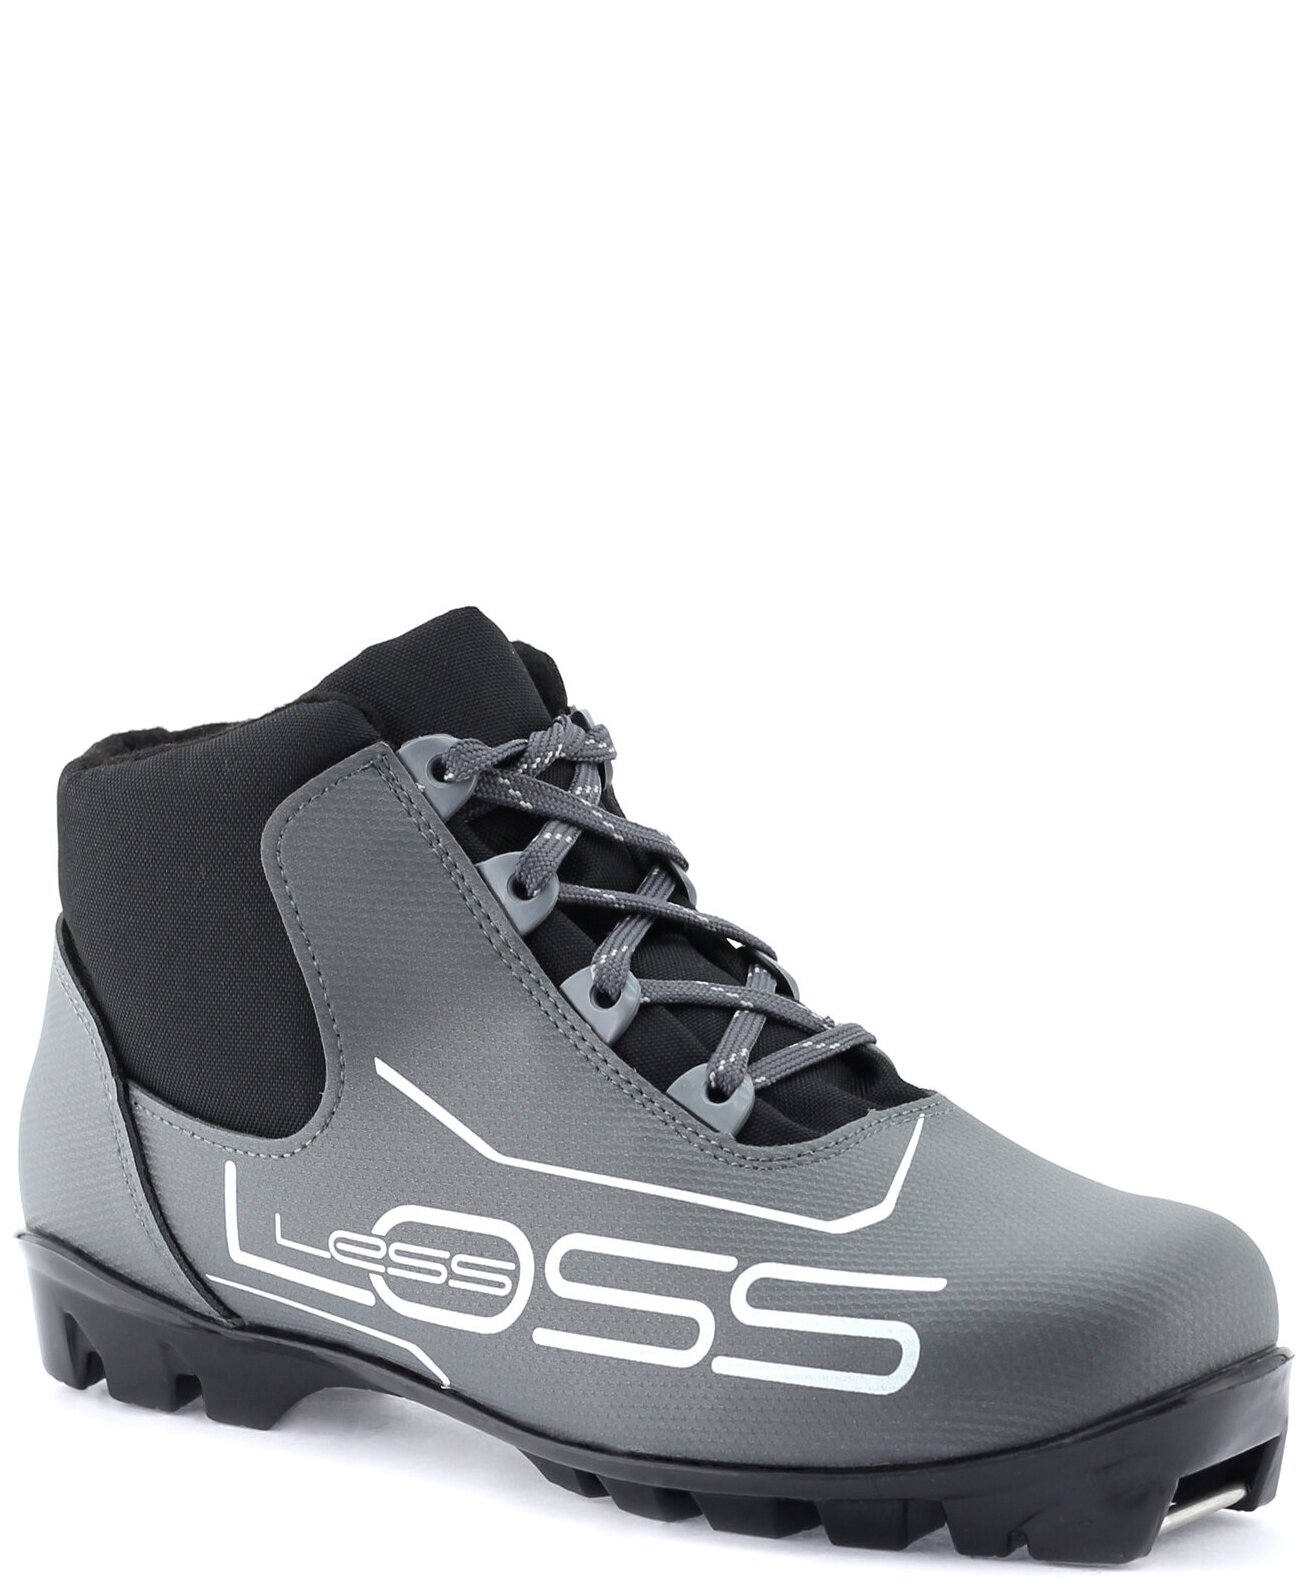 Ботинки лыжные LOSS артикул 243 NNN, размер 40